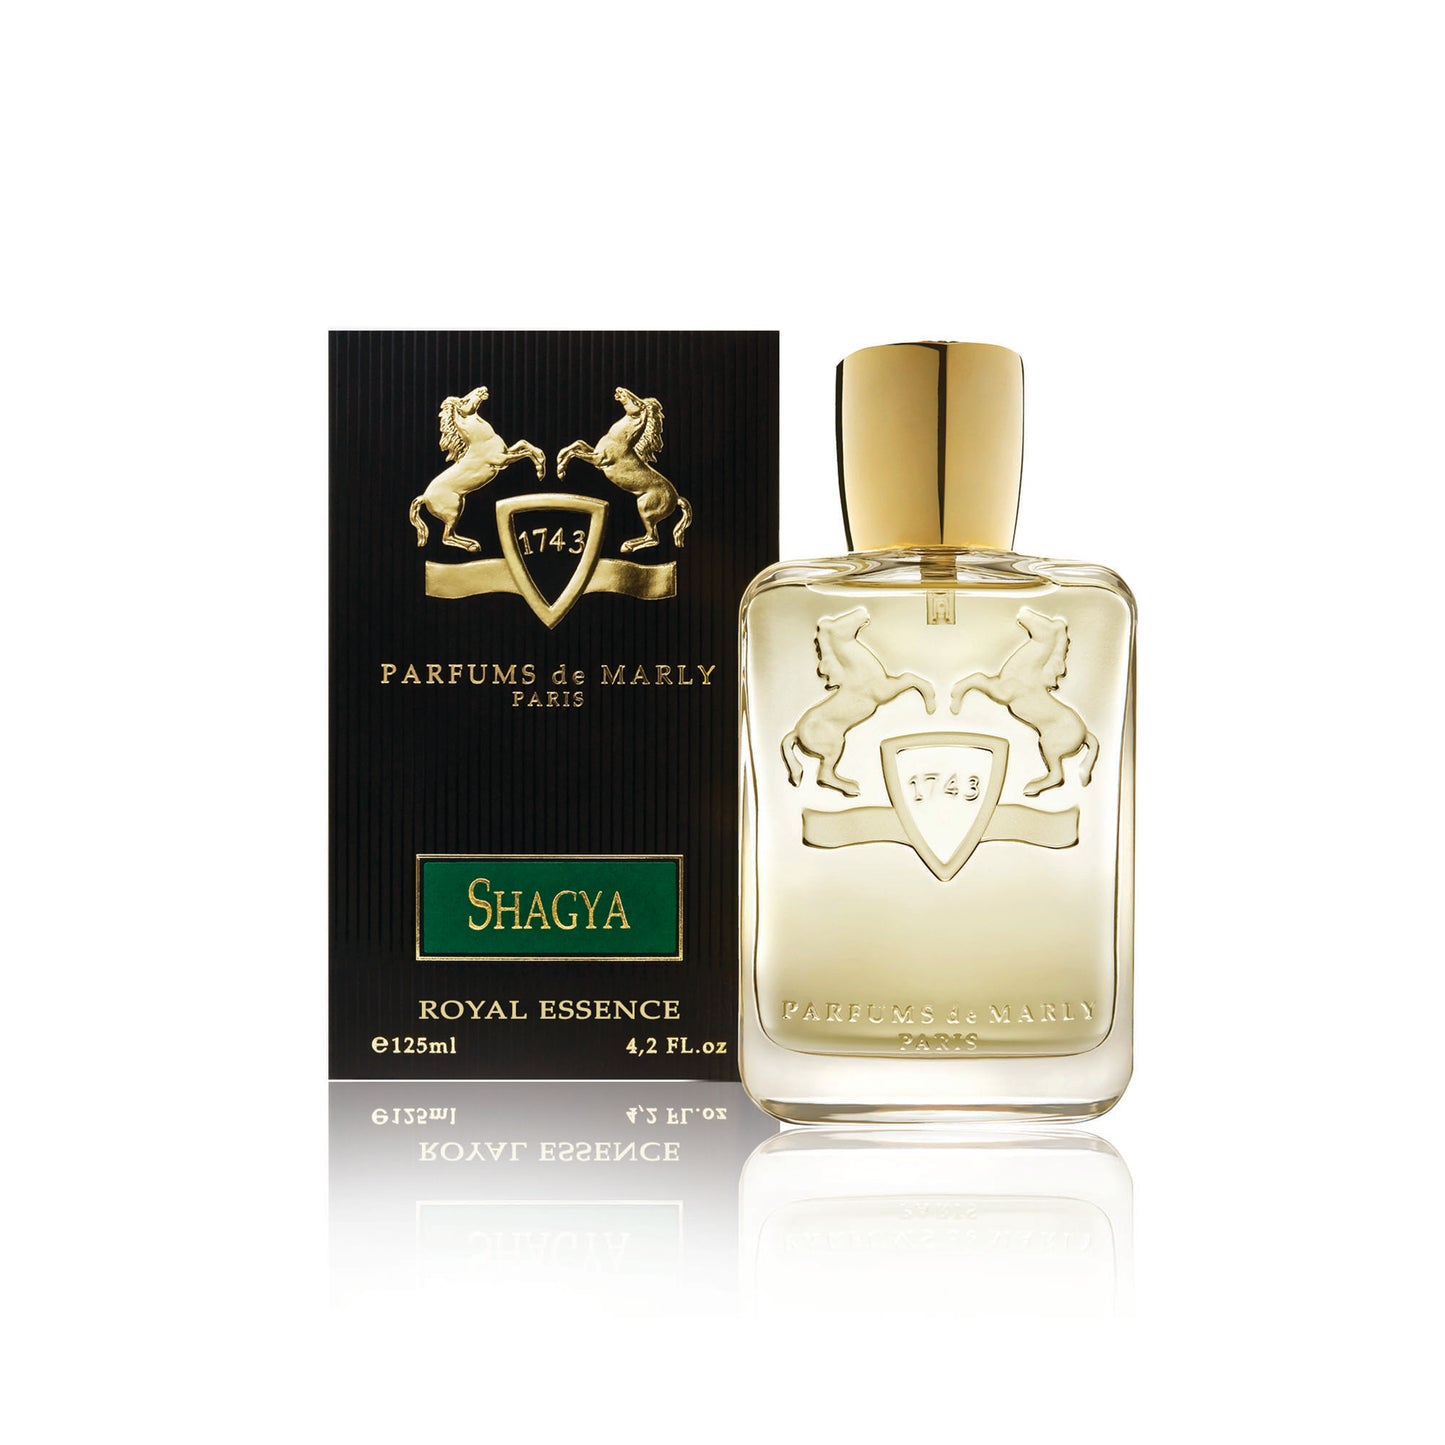 SHAGYA 1.2ml Sample Vial - Eau de Parfum